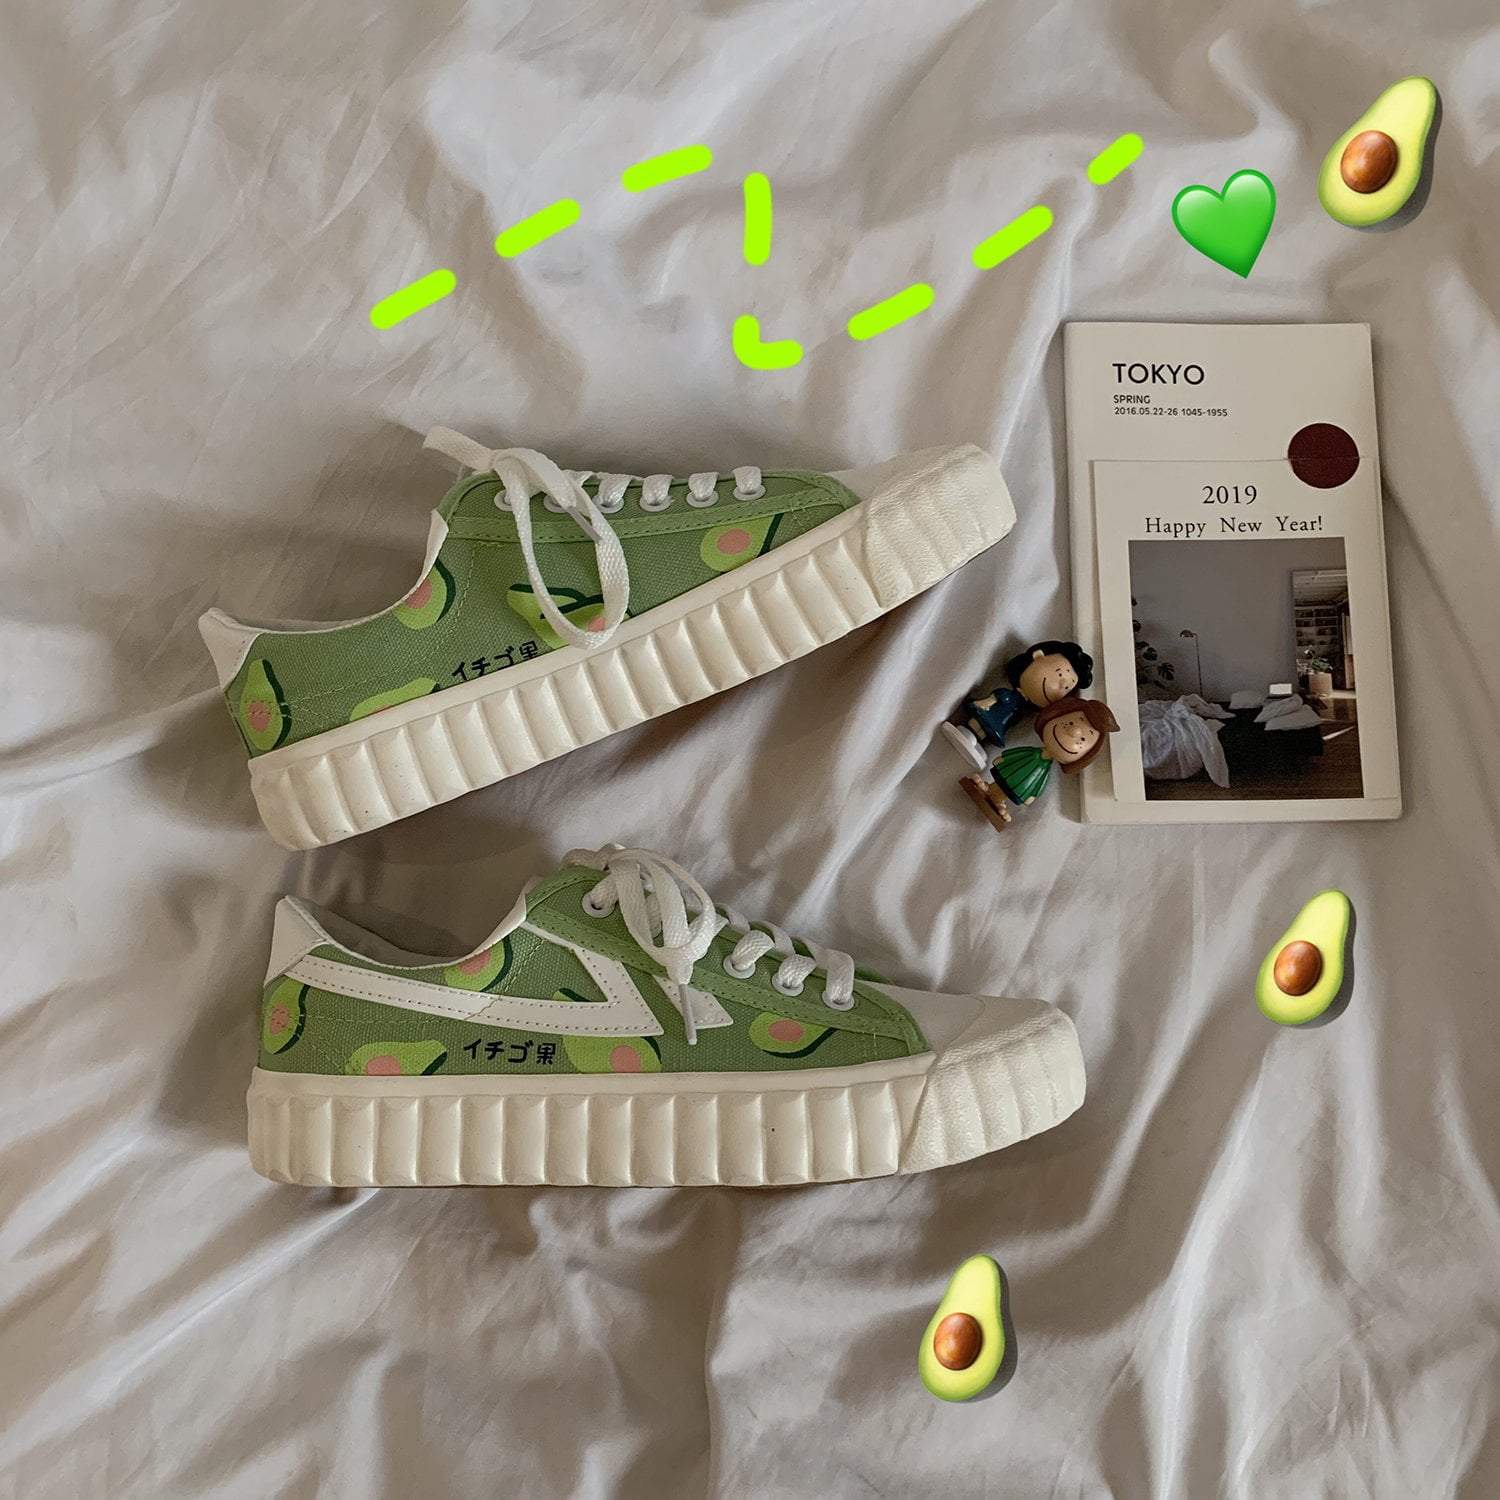 Green Star Sneakers, EU36 (US6.0) / Green